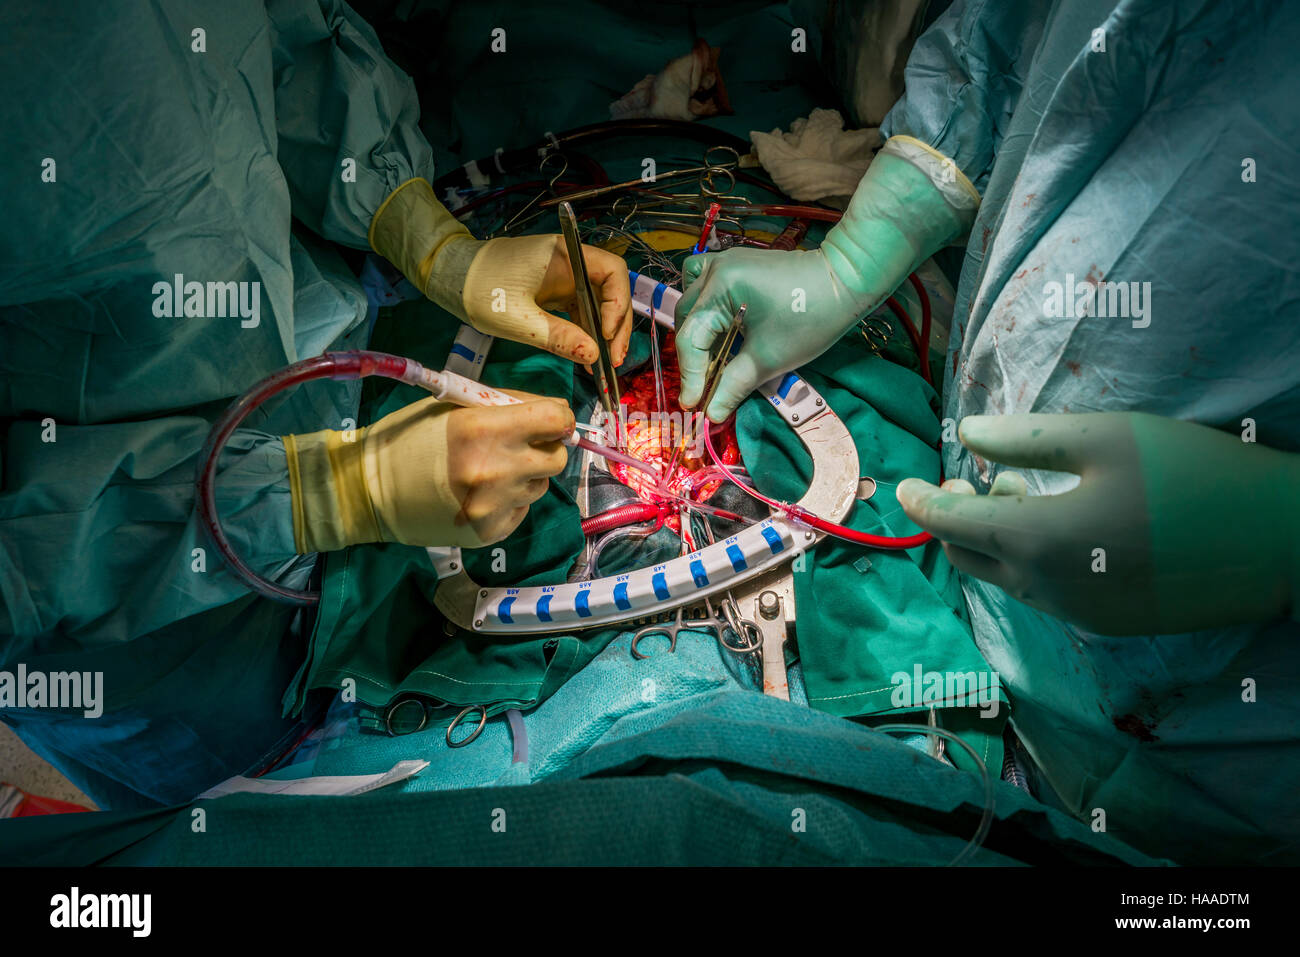 Sostituzione di valvola cardiaca chirurgia, sala operatoria, Reykjavik, Islanda Foto Stock